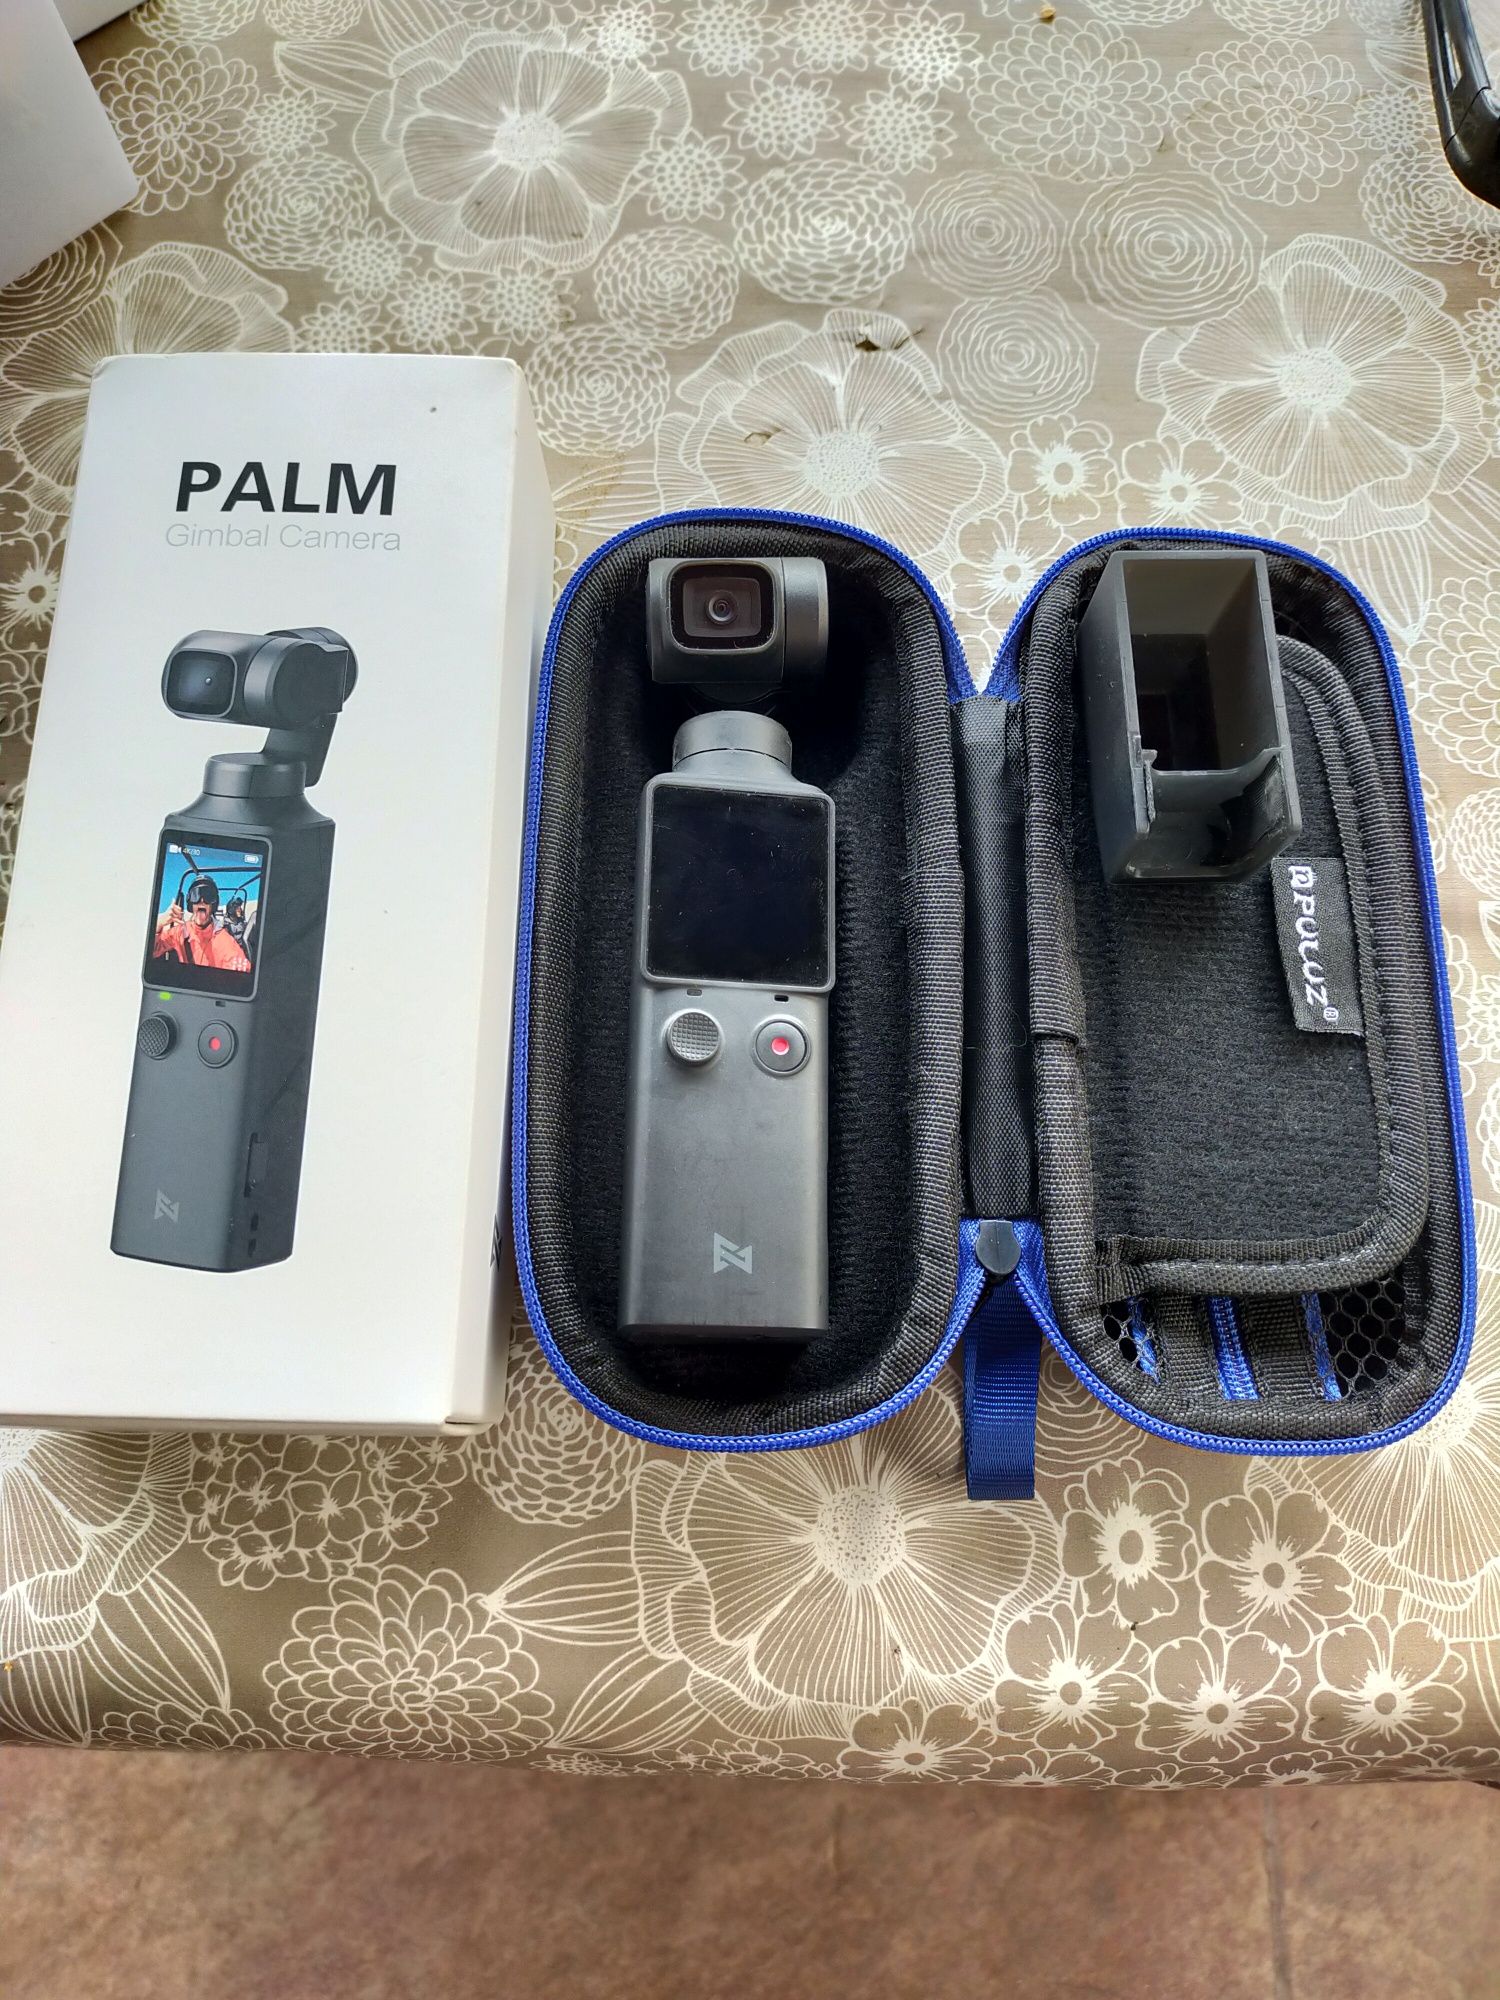 Fimi palm gimbal camera